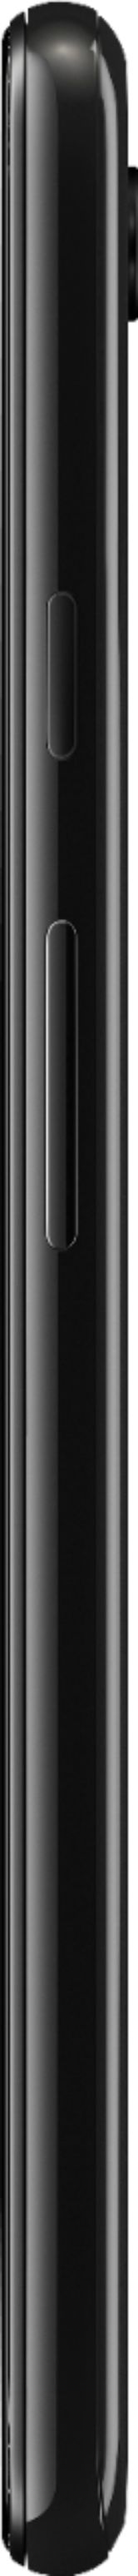 Best Buy: Google Pixel 3 XL 64GB Just Black (Verizon) GA00475-US